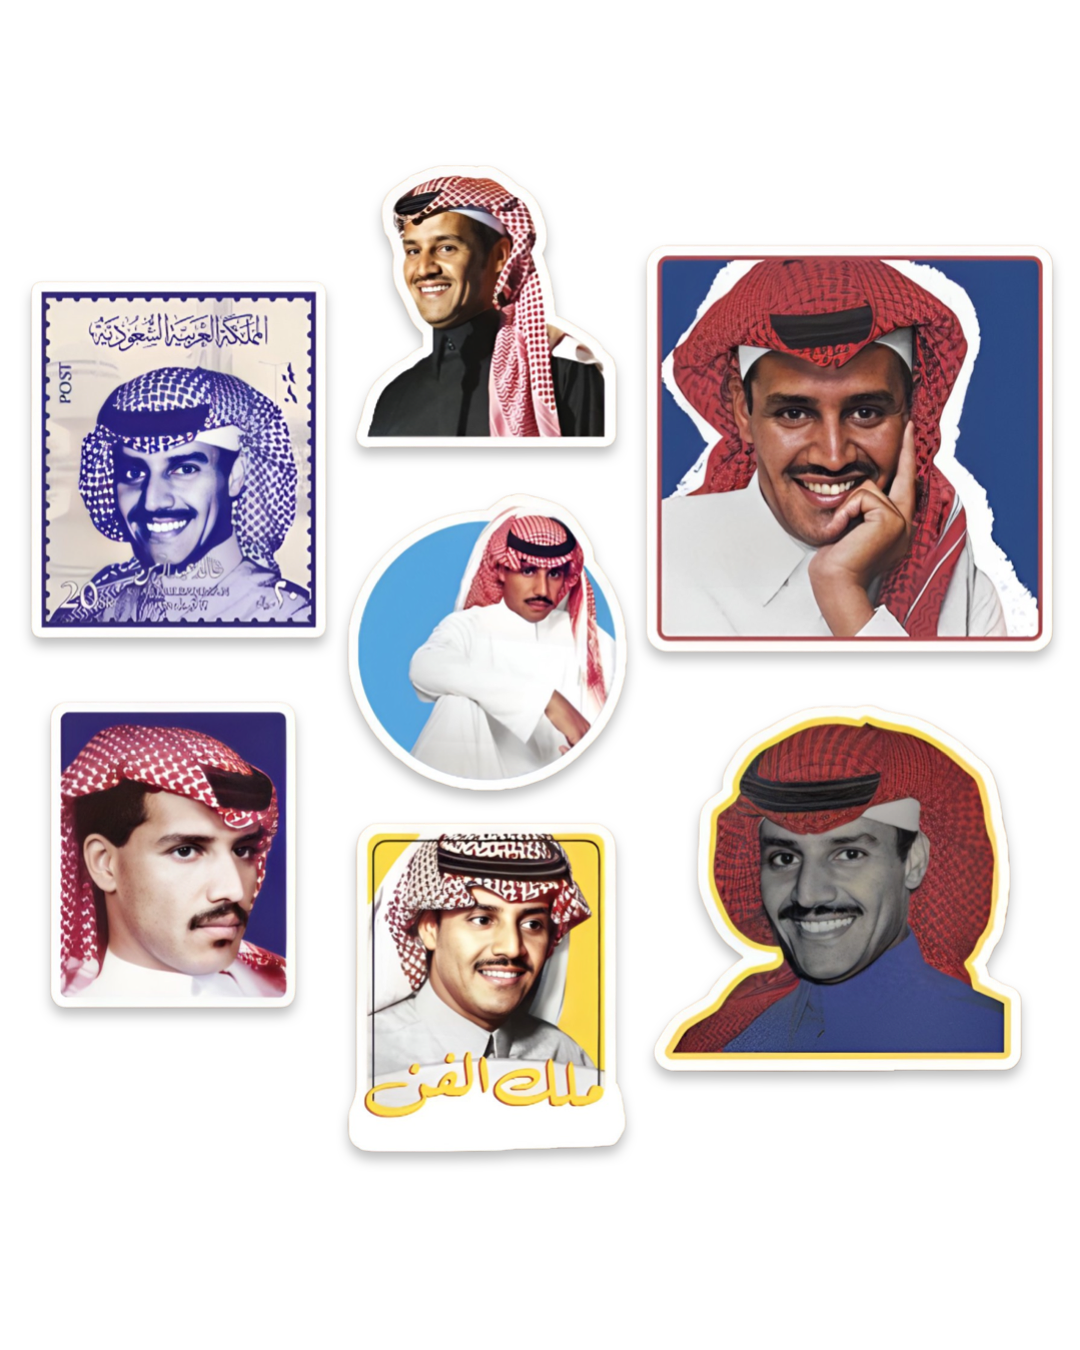 Khalid Abdulrahman Stickers pack